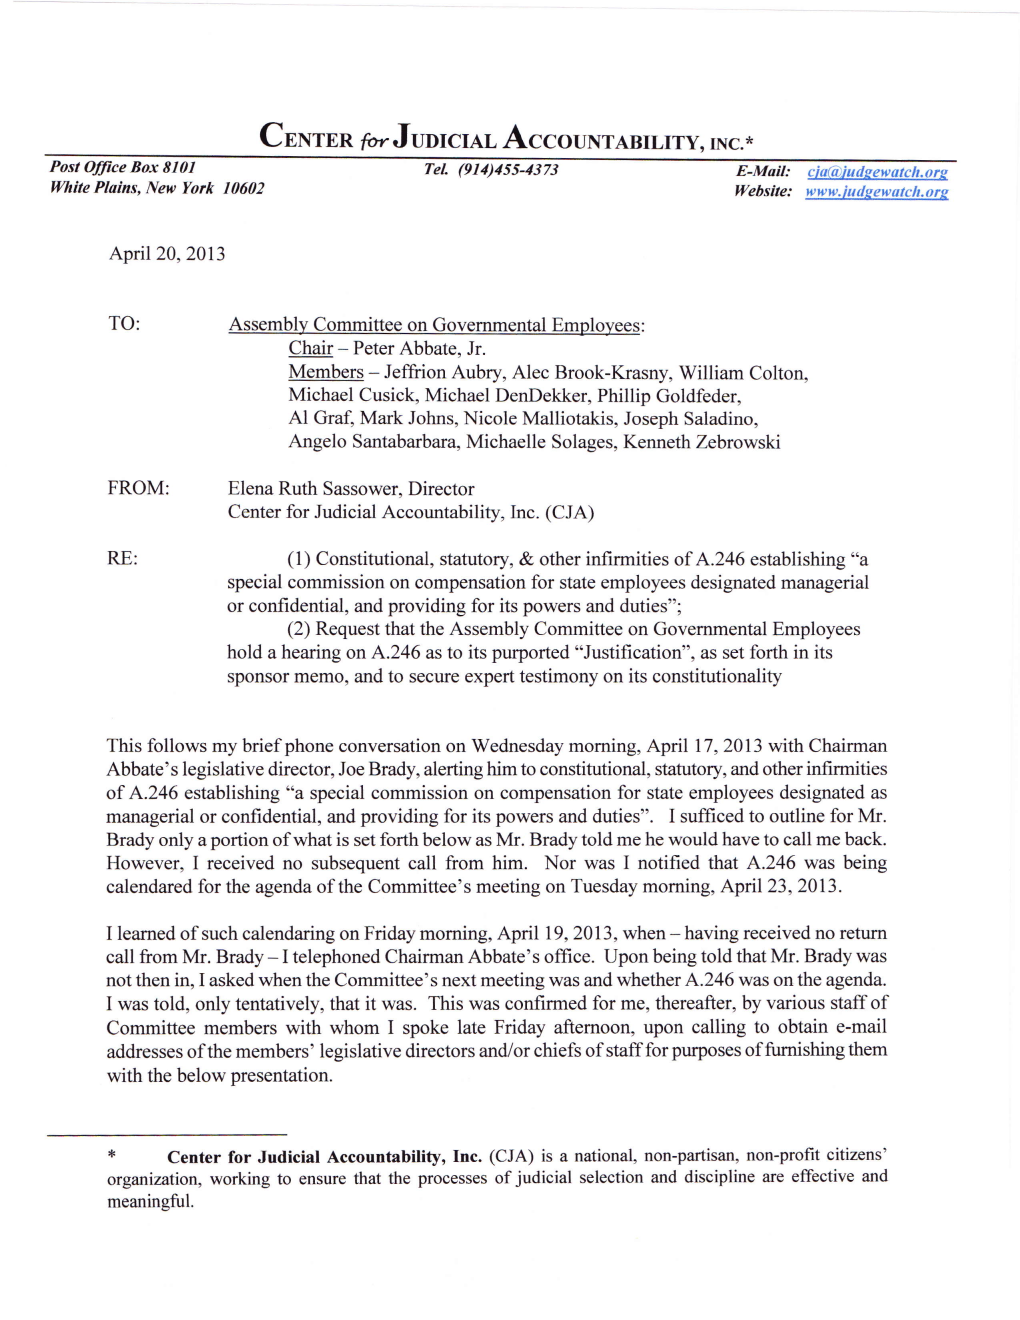 CJA's April 20, 2013 Memorandum to Assemblyman Zebrowski & All Other